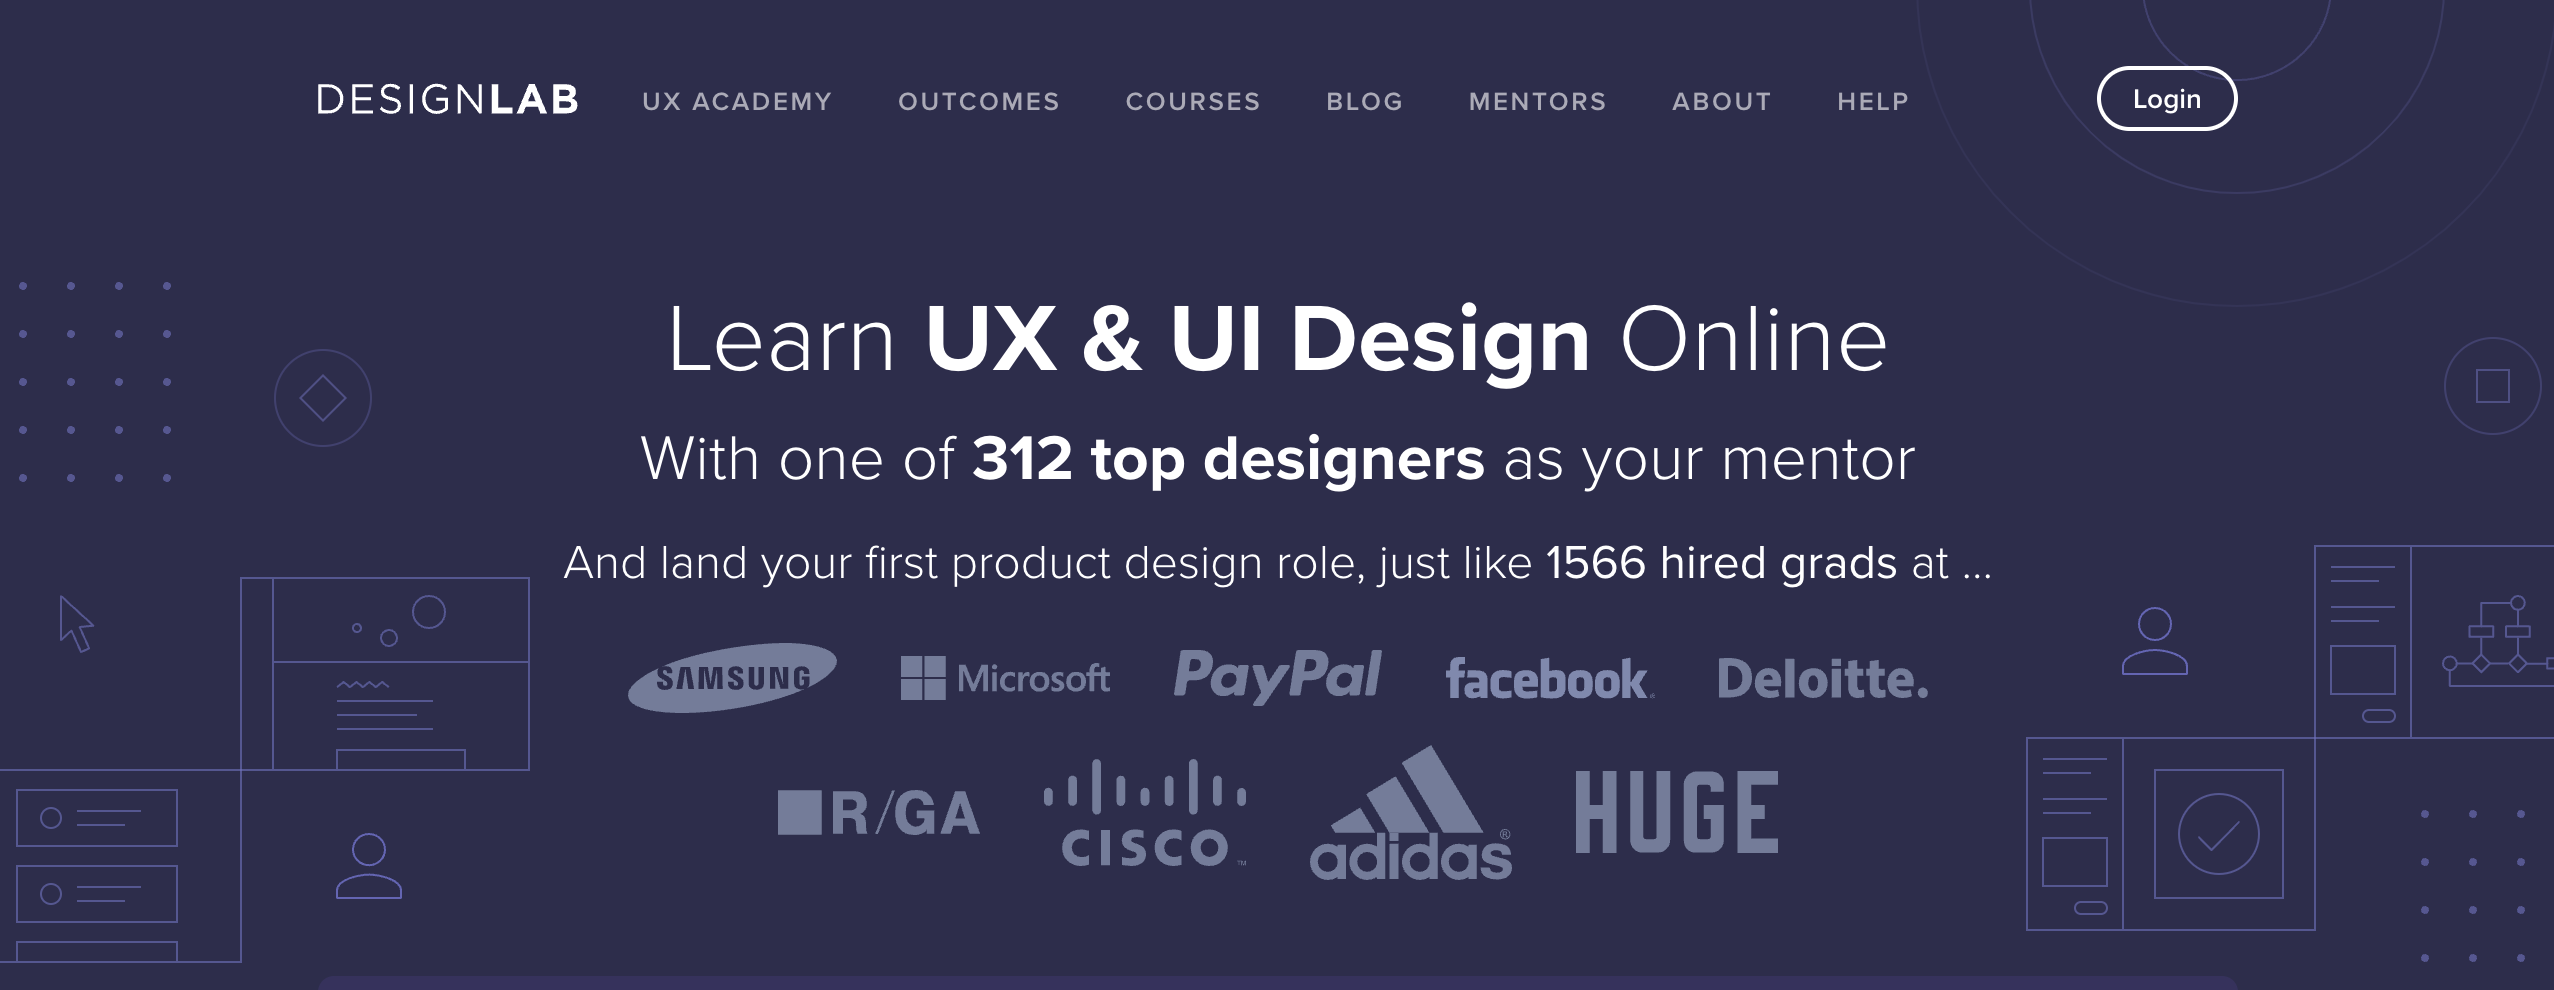 Designlab ui ux course homepage